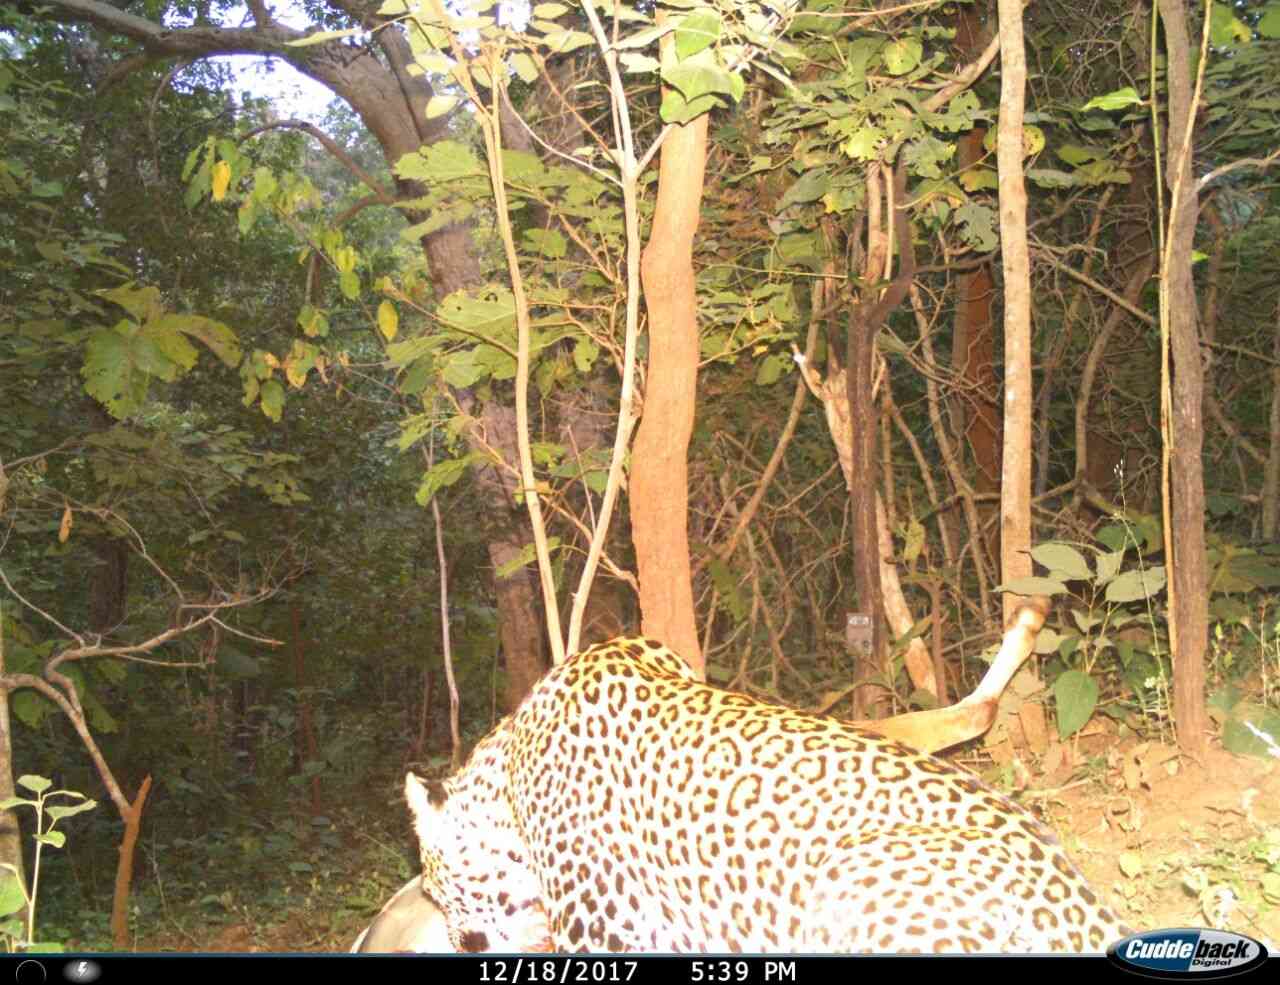 animal death in leopard attack